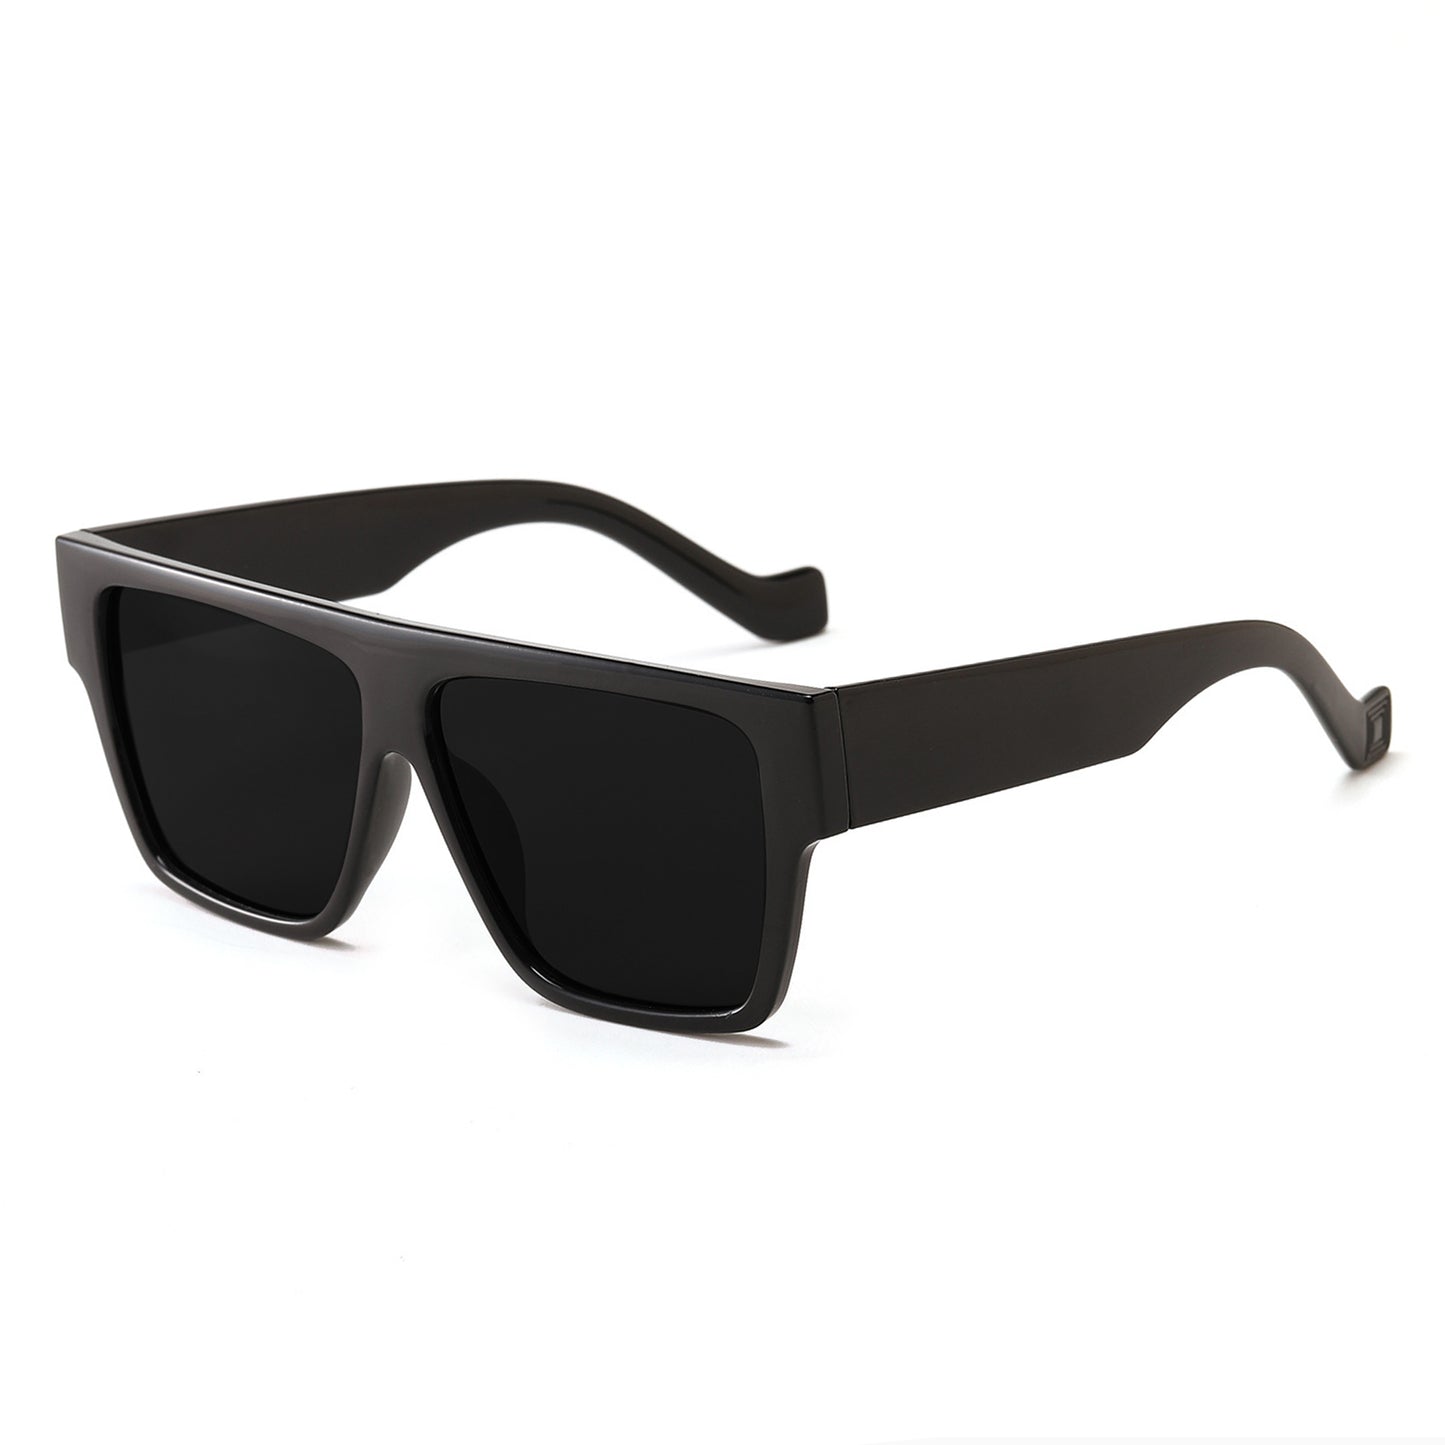 zedo Exclusive Edition Unisex Sunglasses